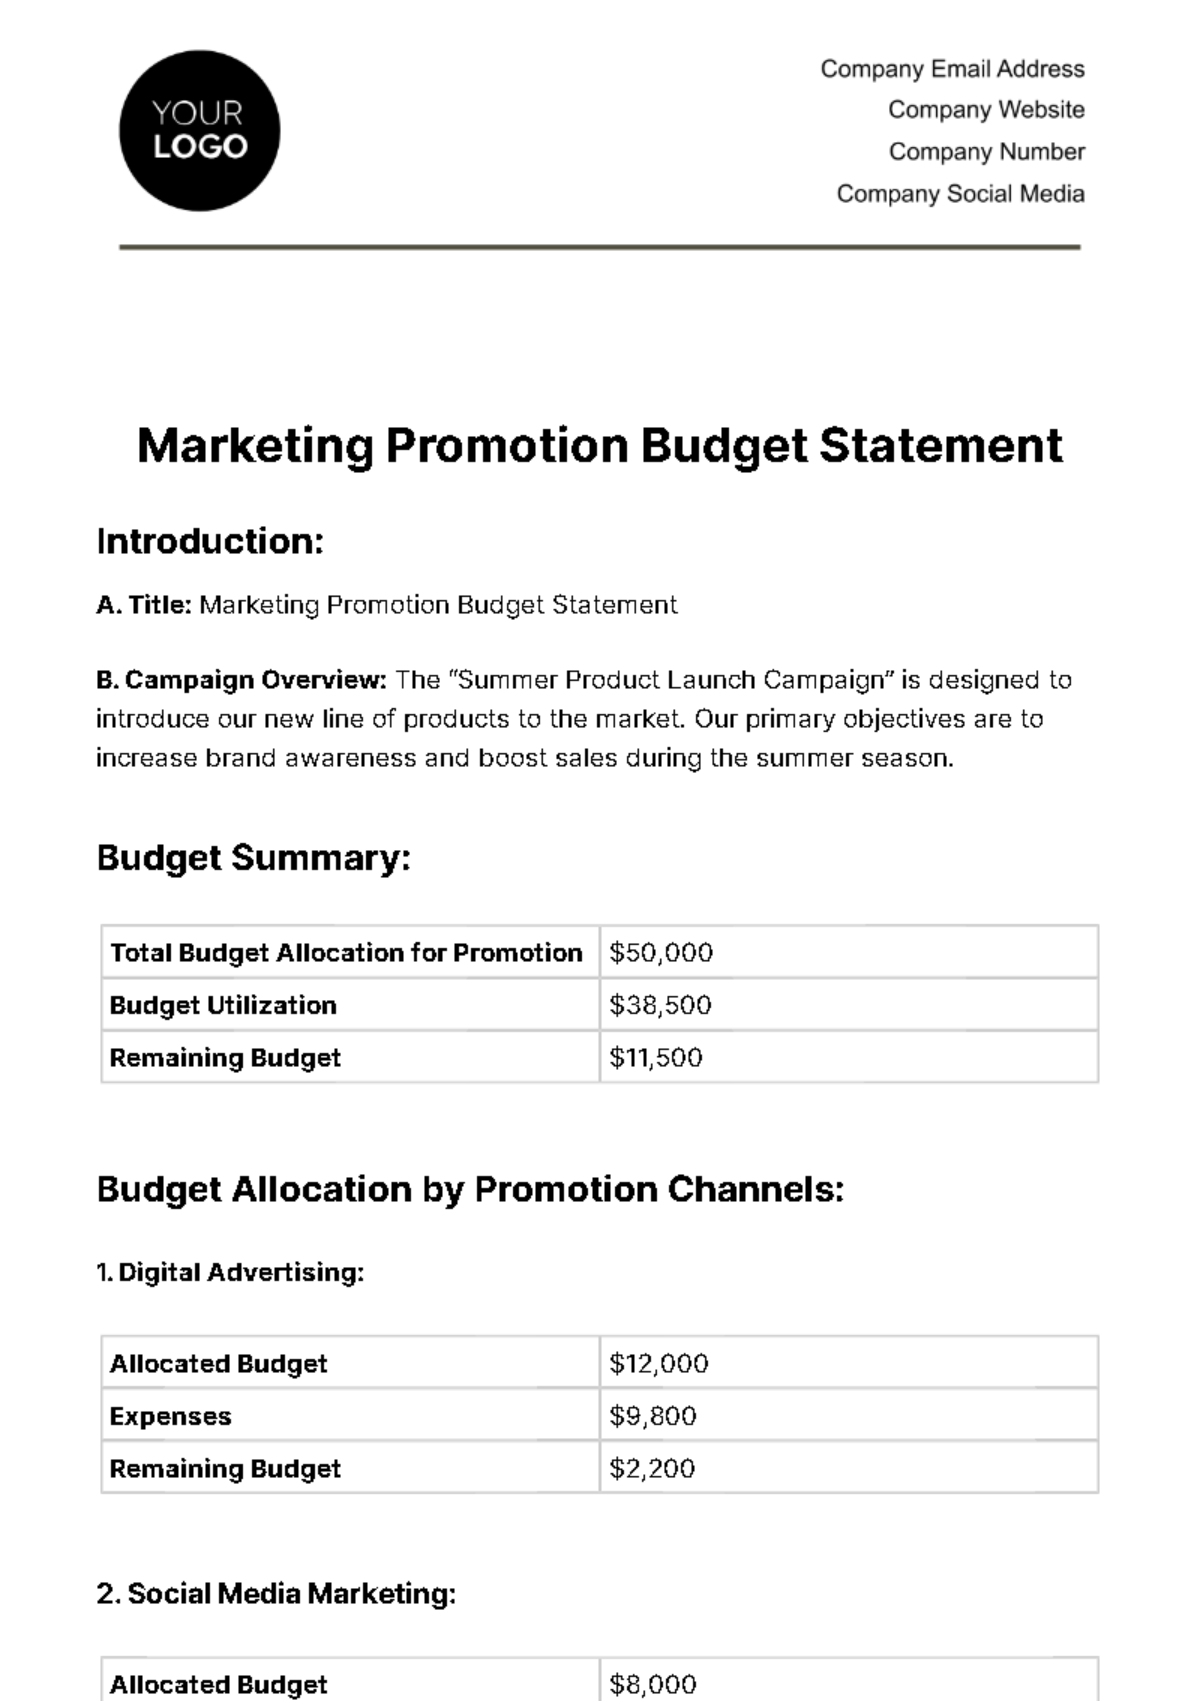 Marketing Promotion Budget Statement Template